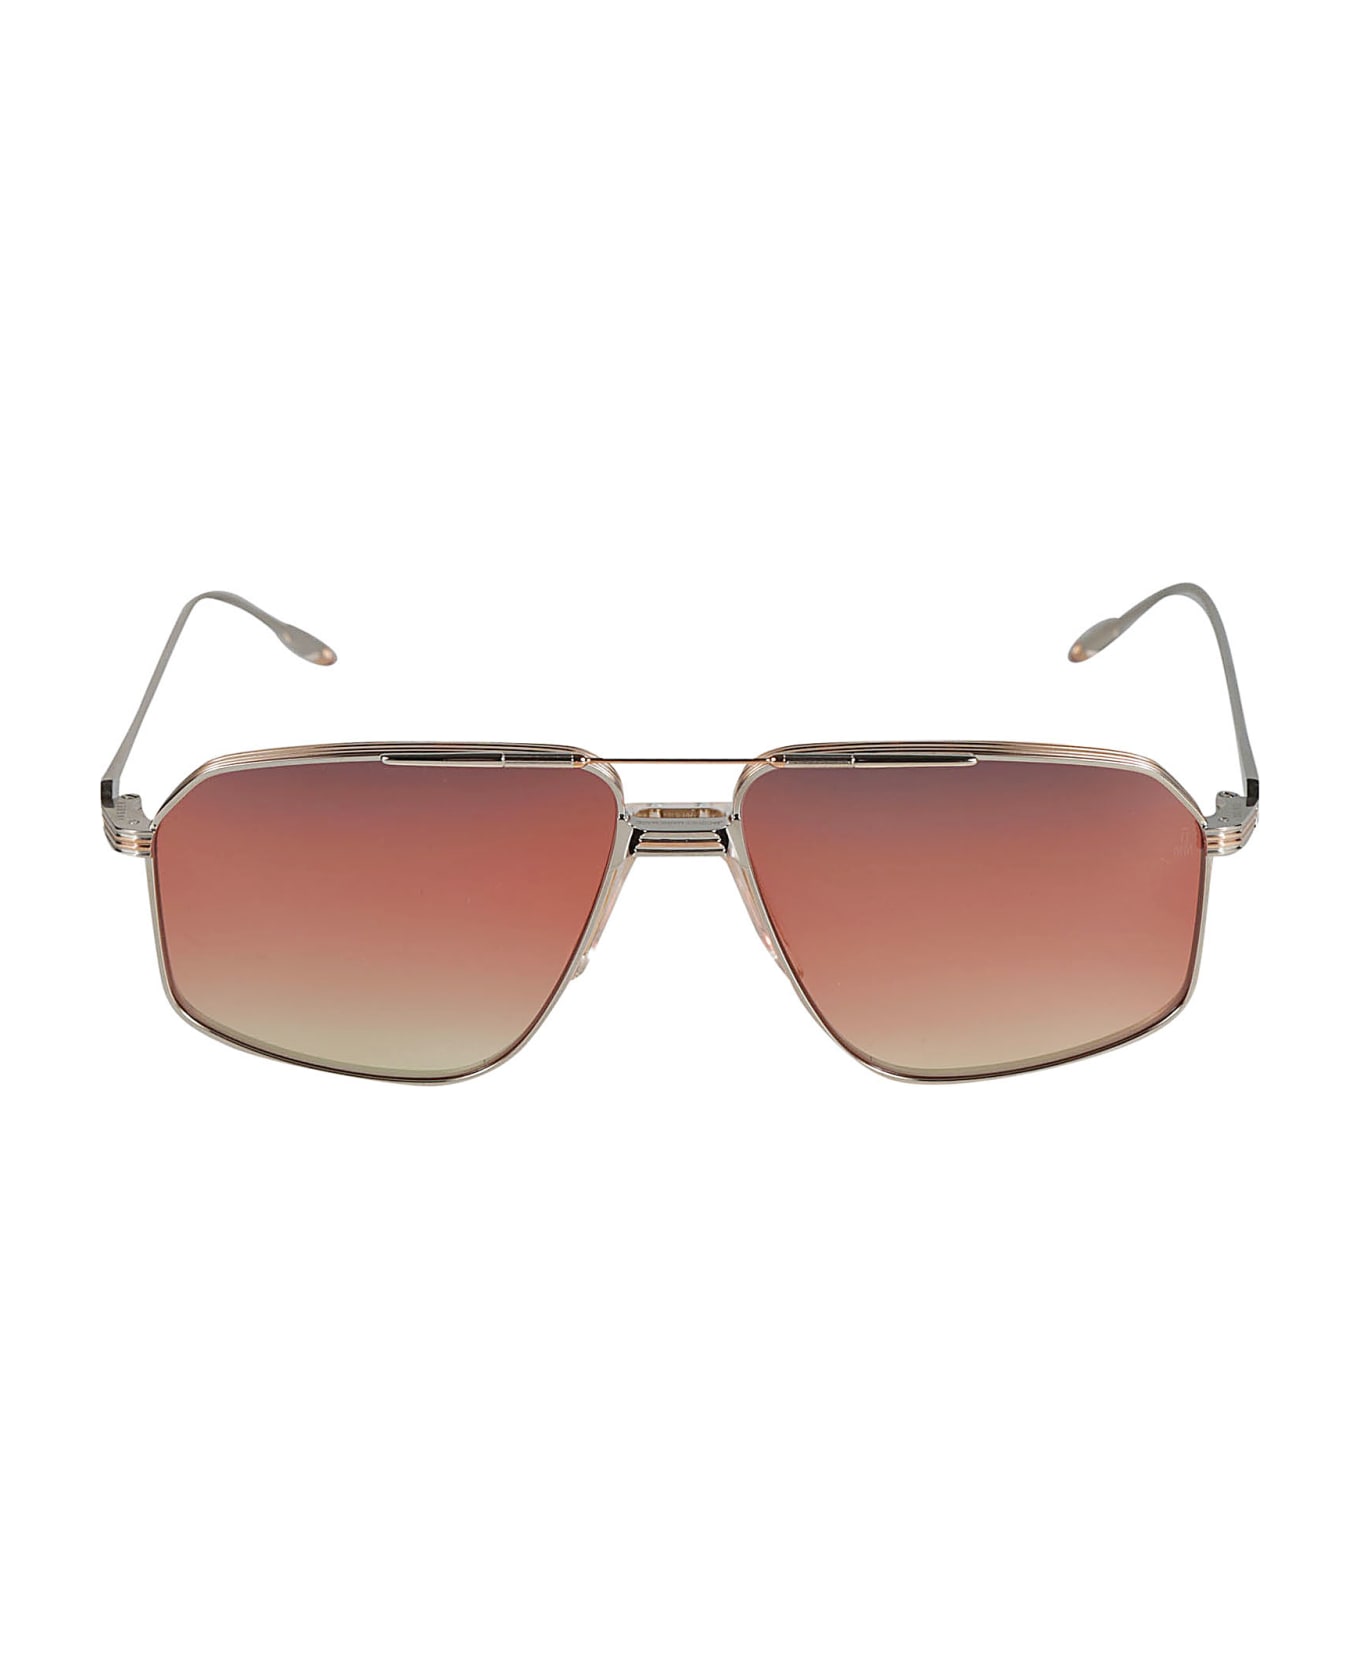 Jacques Marie Mage Aviator Sunglasses - paradise